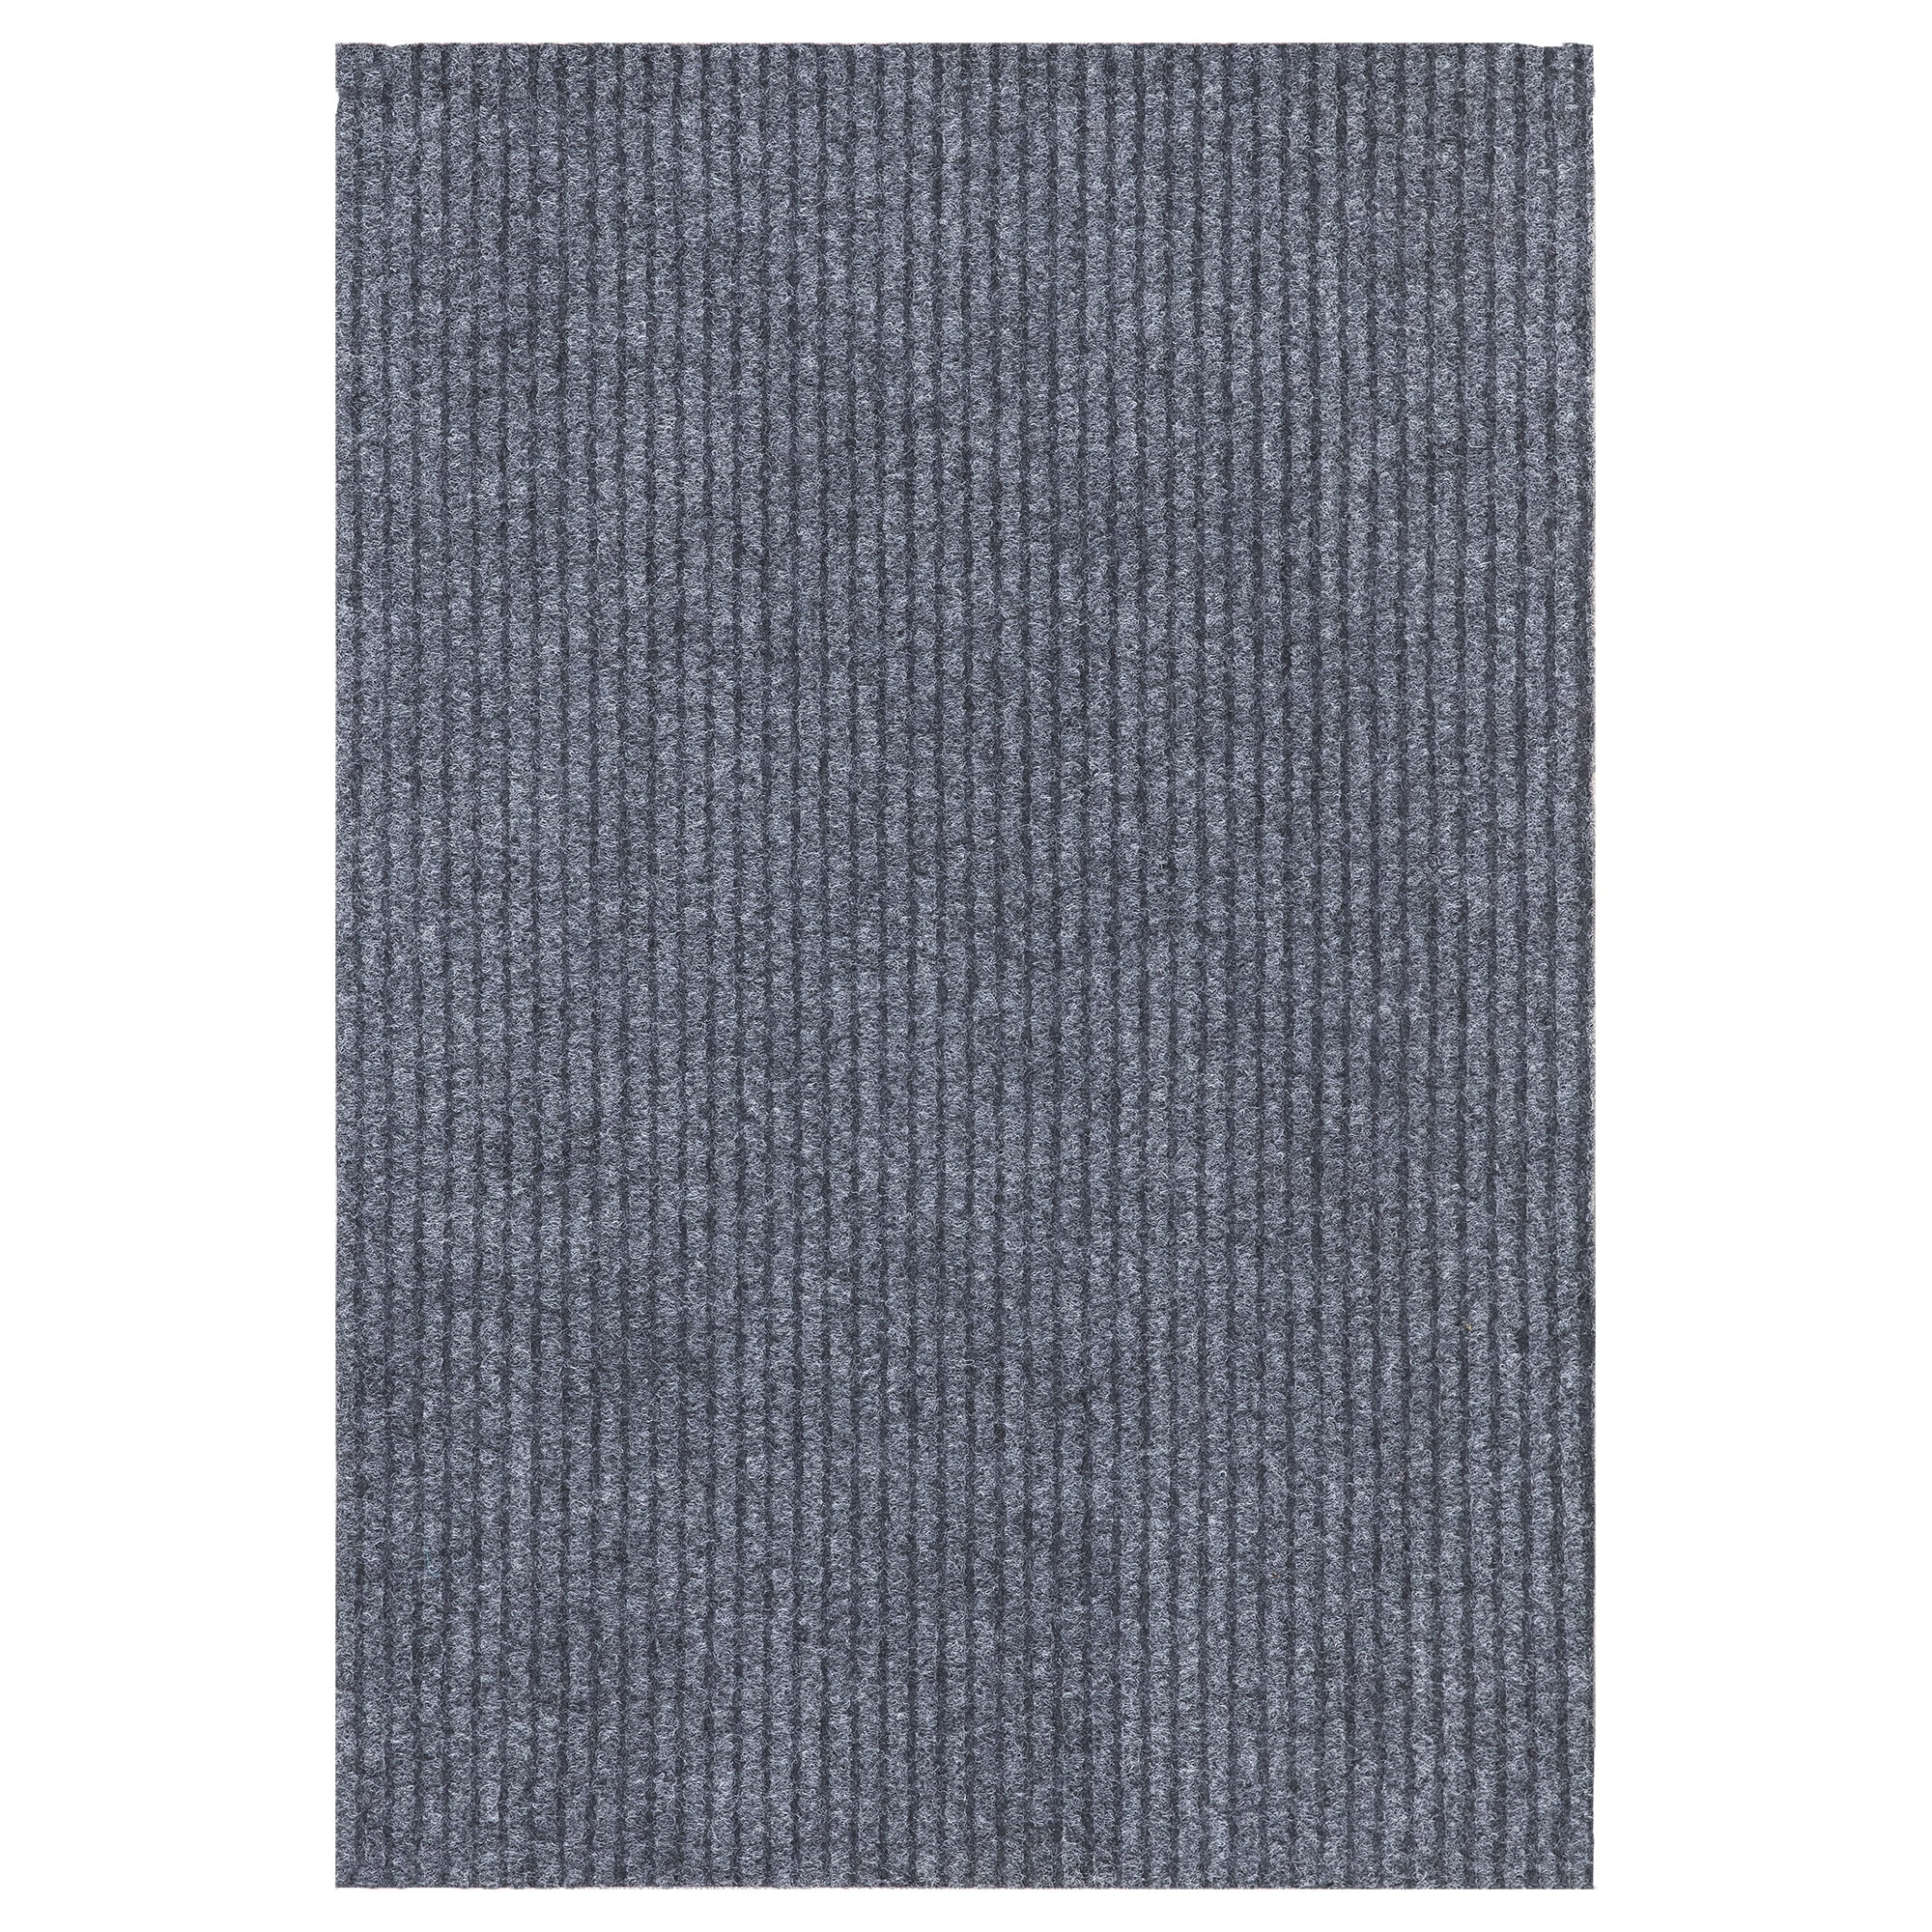 Rug Backing Non-Slip, Riiai Fabric 72x40 Inch, 72 × 40, Grey